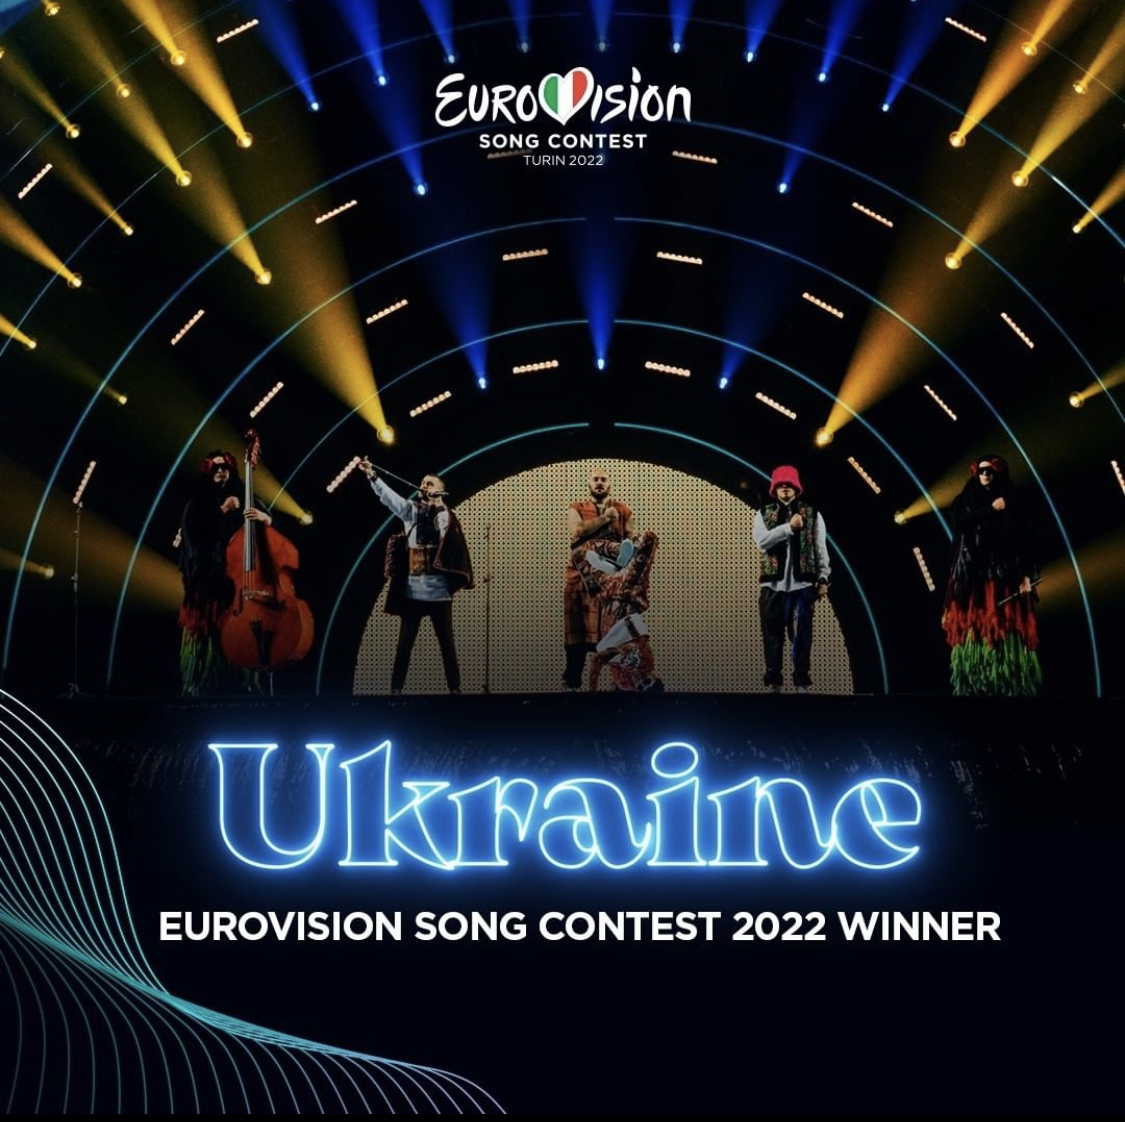 Ukraine won the Eurovision Song Contest 2022